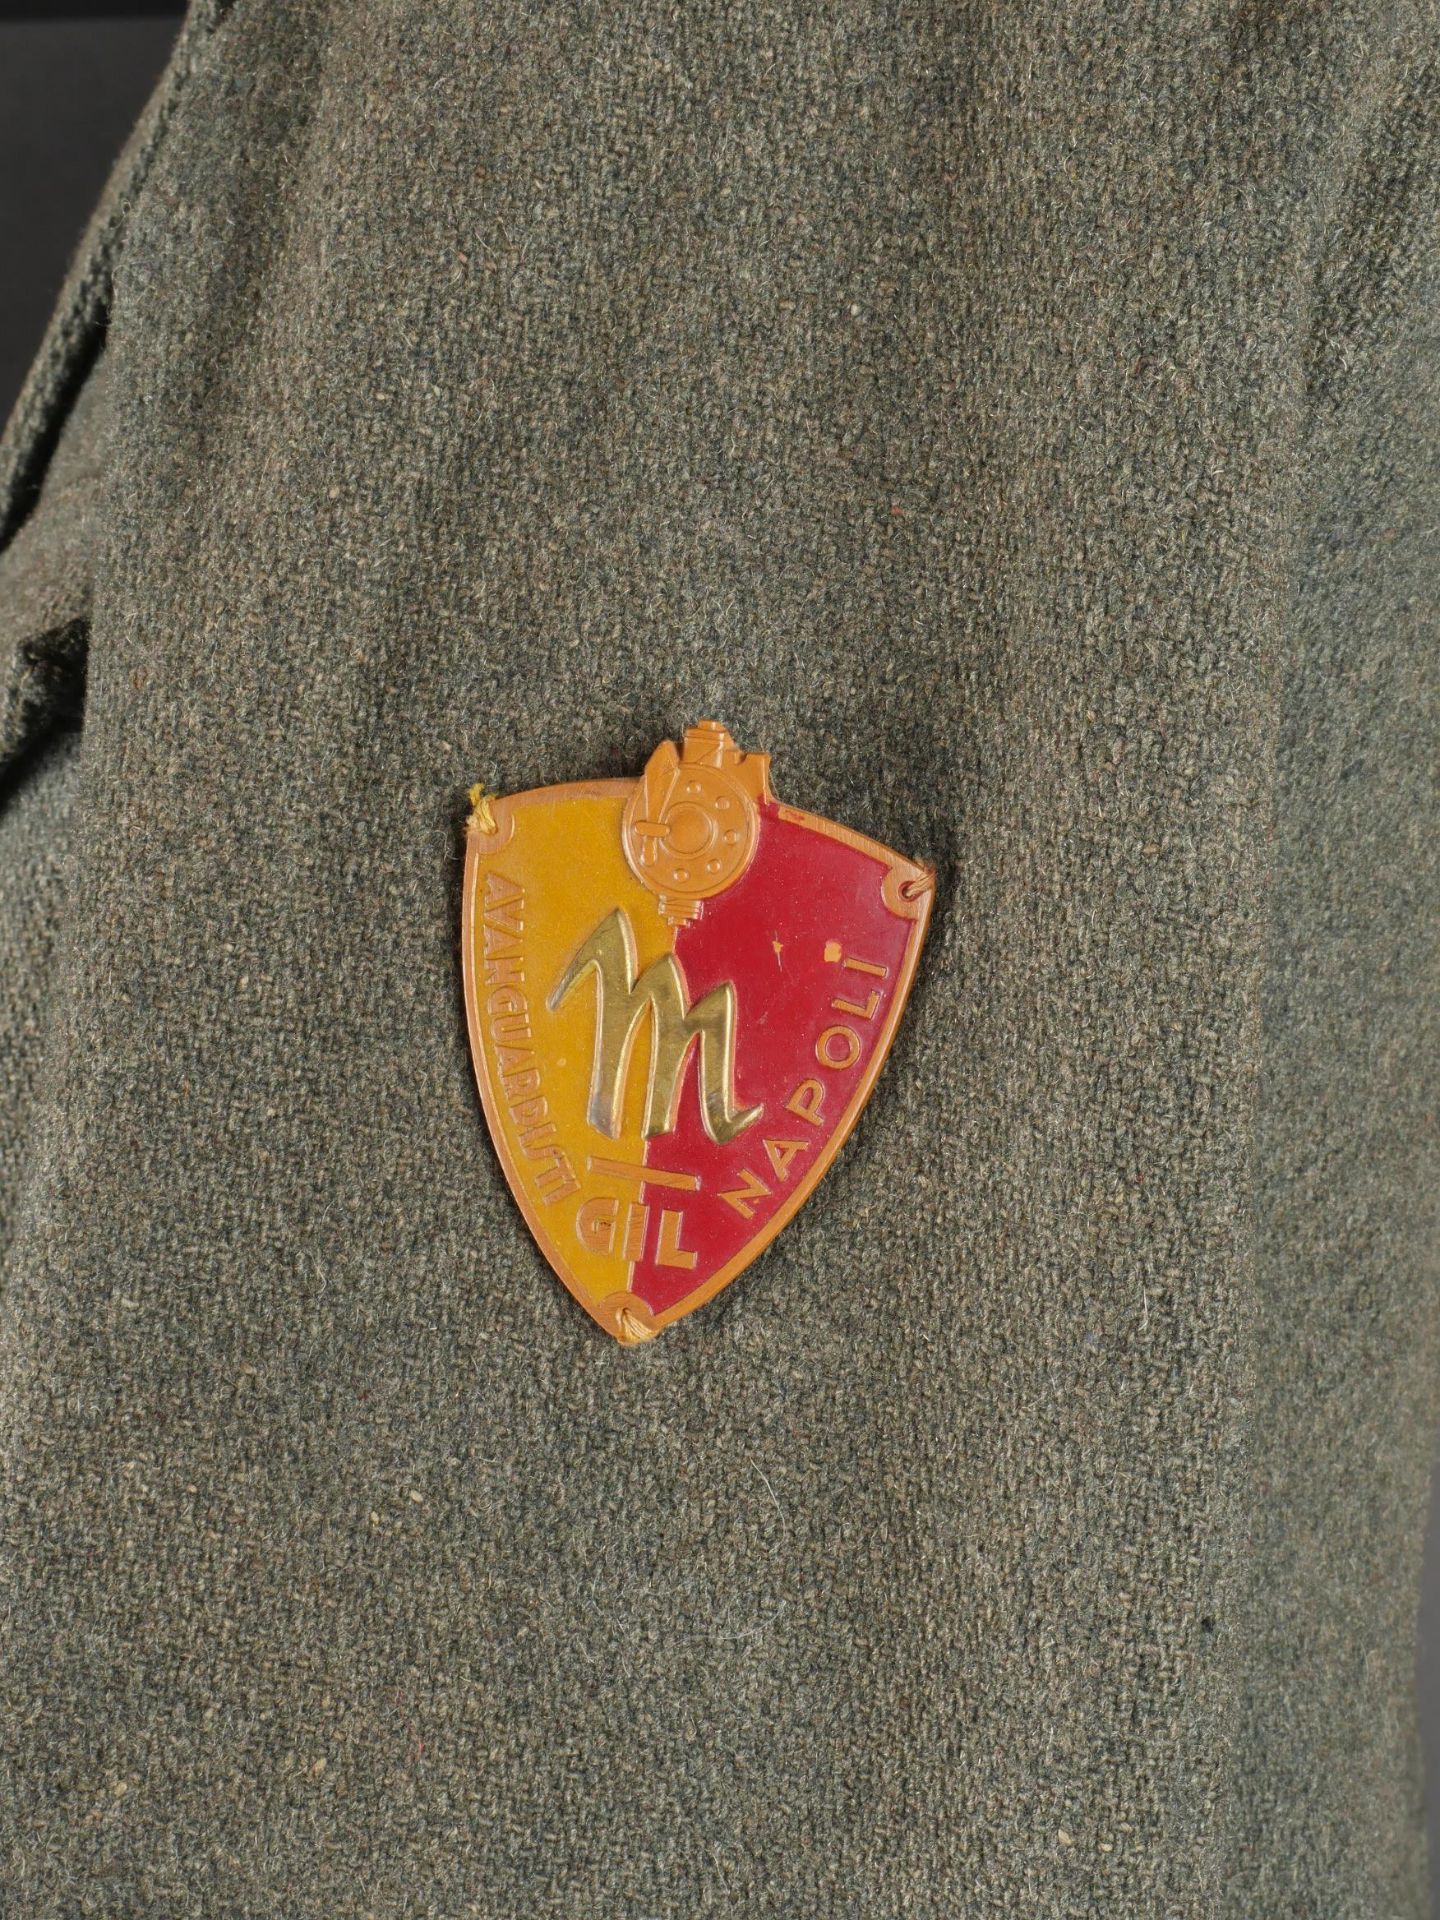 Vareuse des GIL de Giovanni Dorio. GIL jacket by Giovanni Dorio. - Bild 12 aus 19